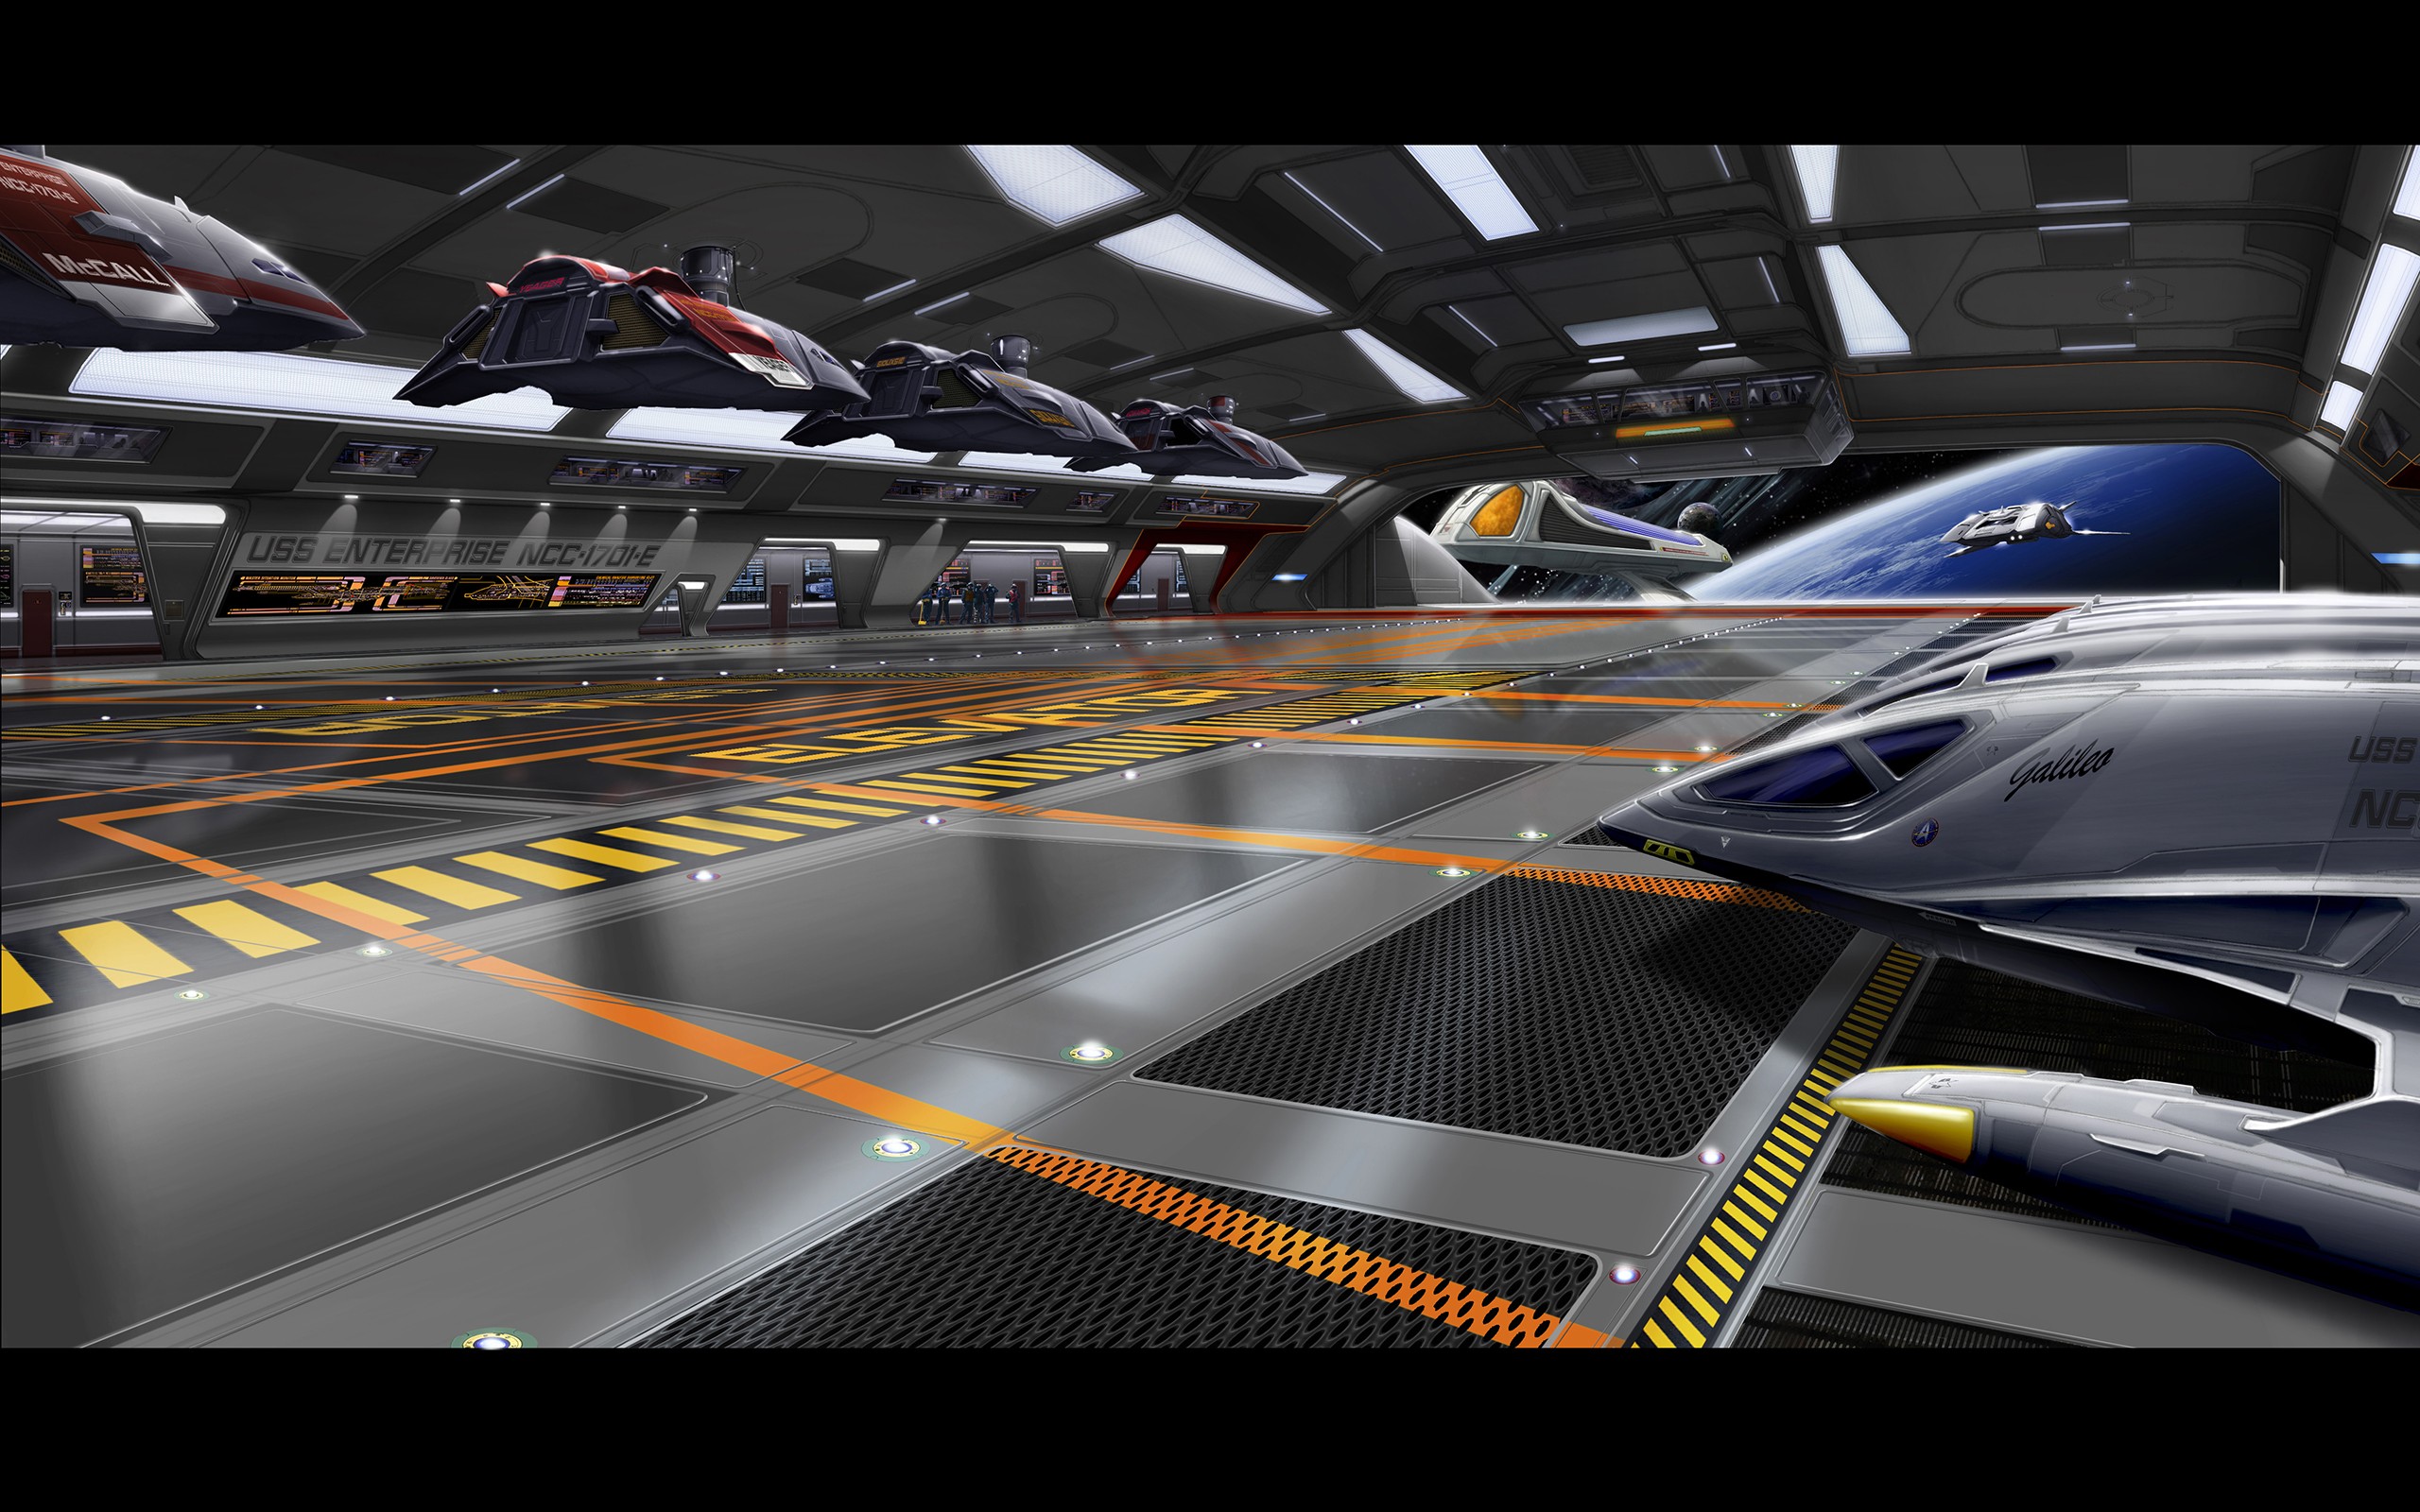 General 2560x1600 Star Trek USS Enterprise (spaceship) artwork digital art science fiction vehicle Star Trek Ships